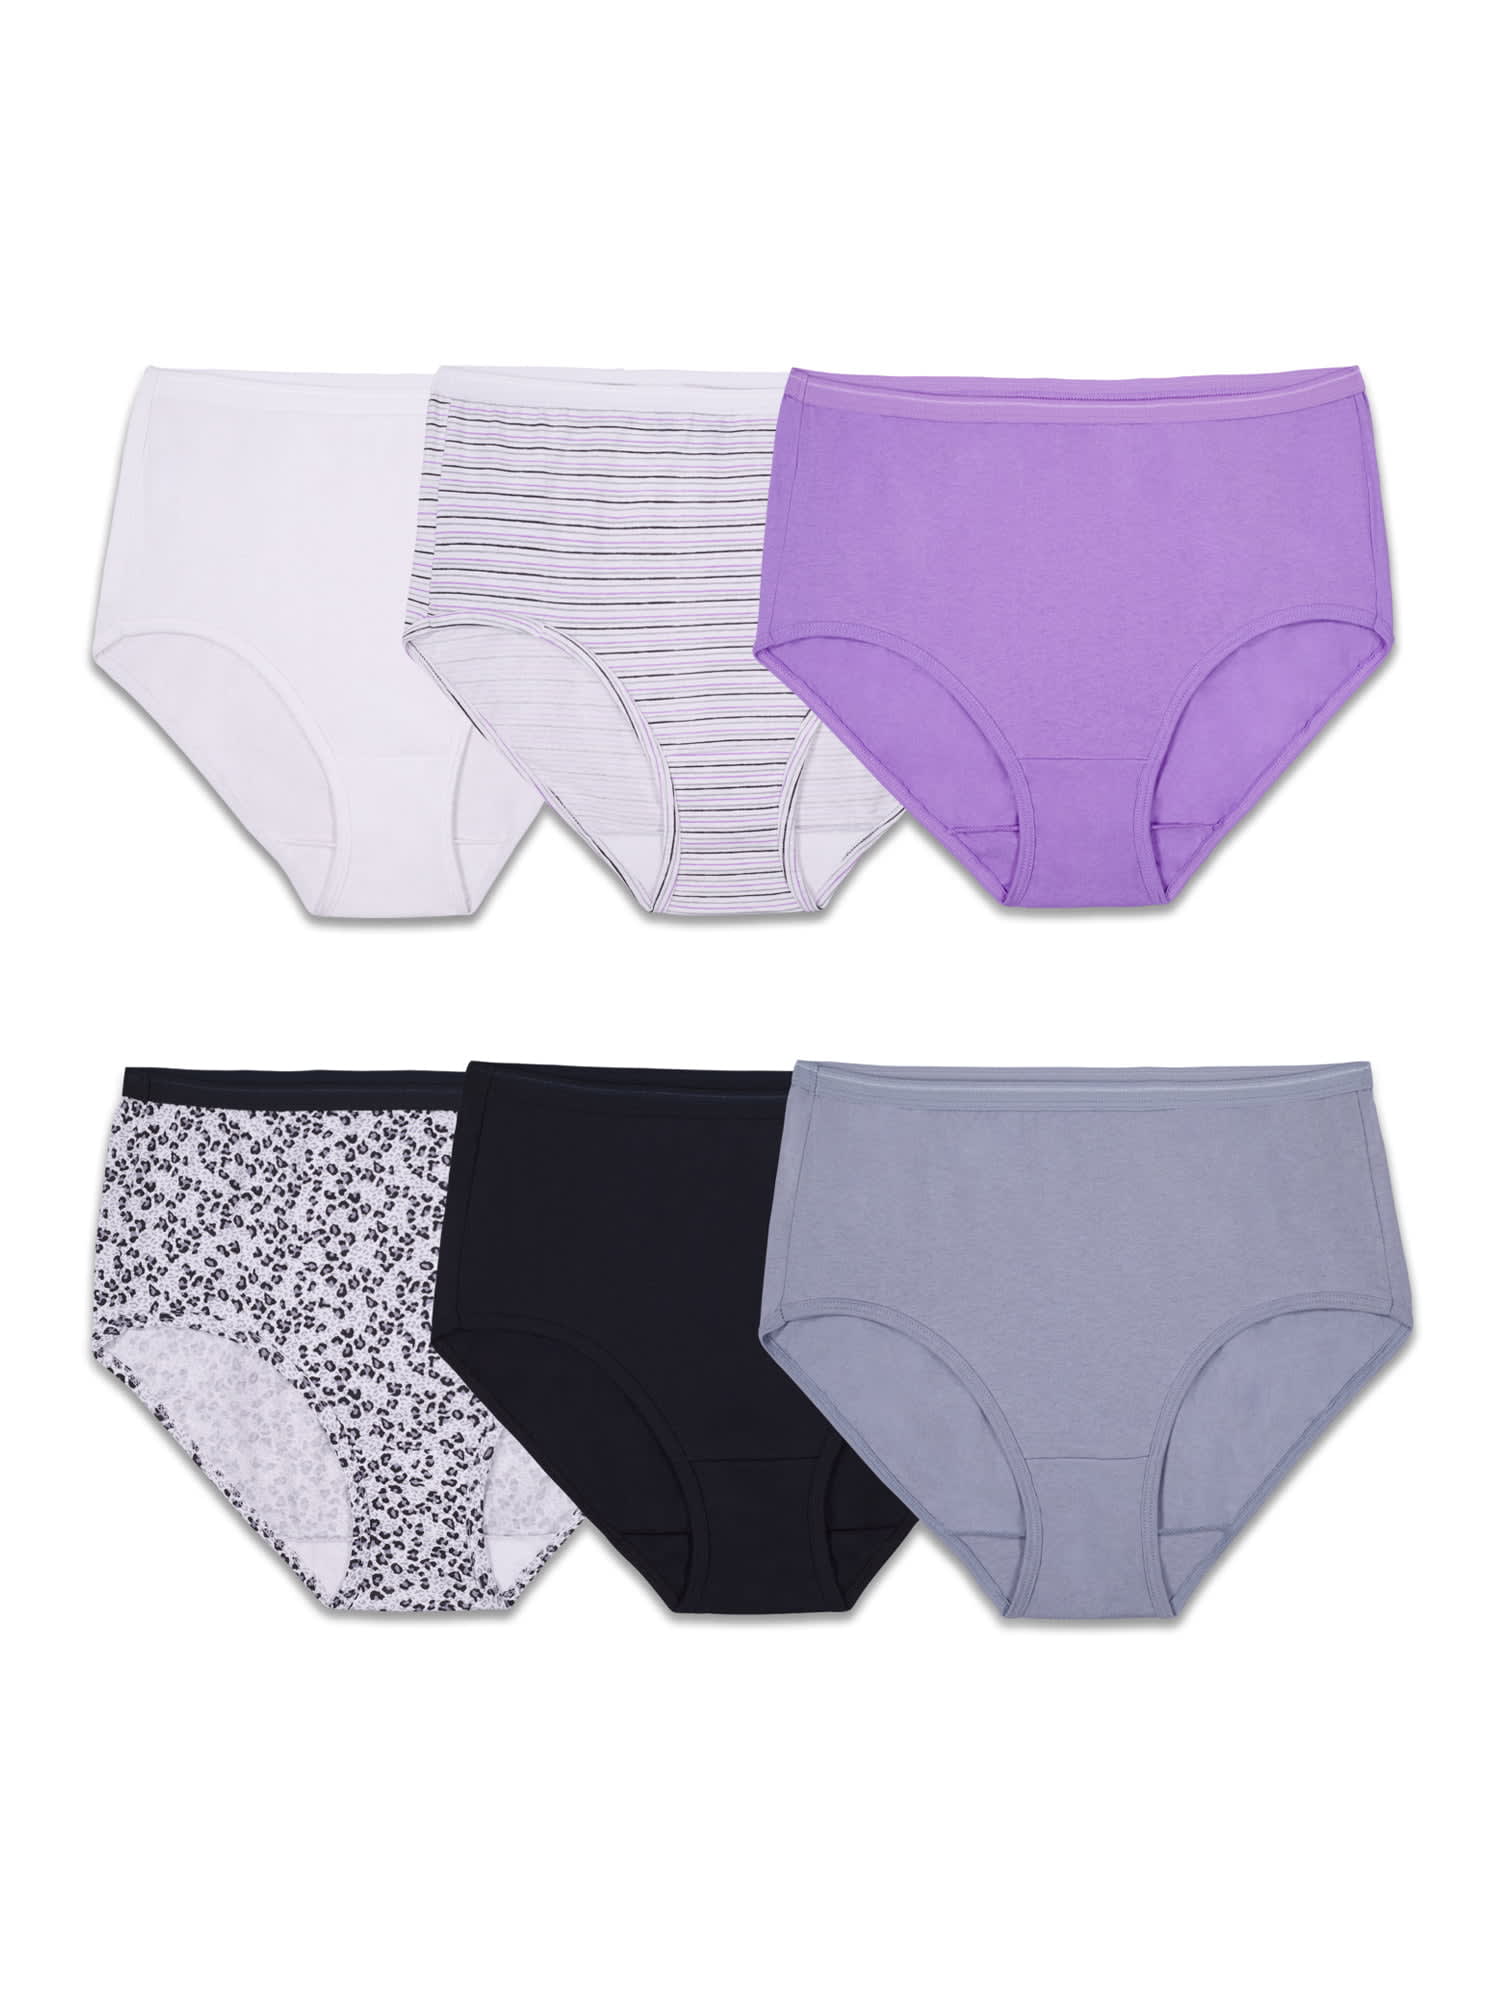 Hanes Women's Cotton Brief Panties 6 Pack 